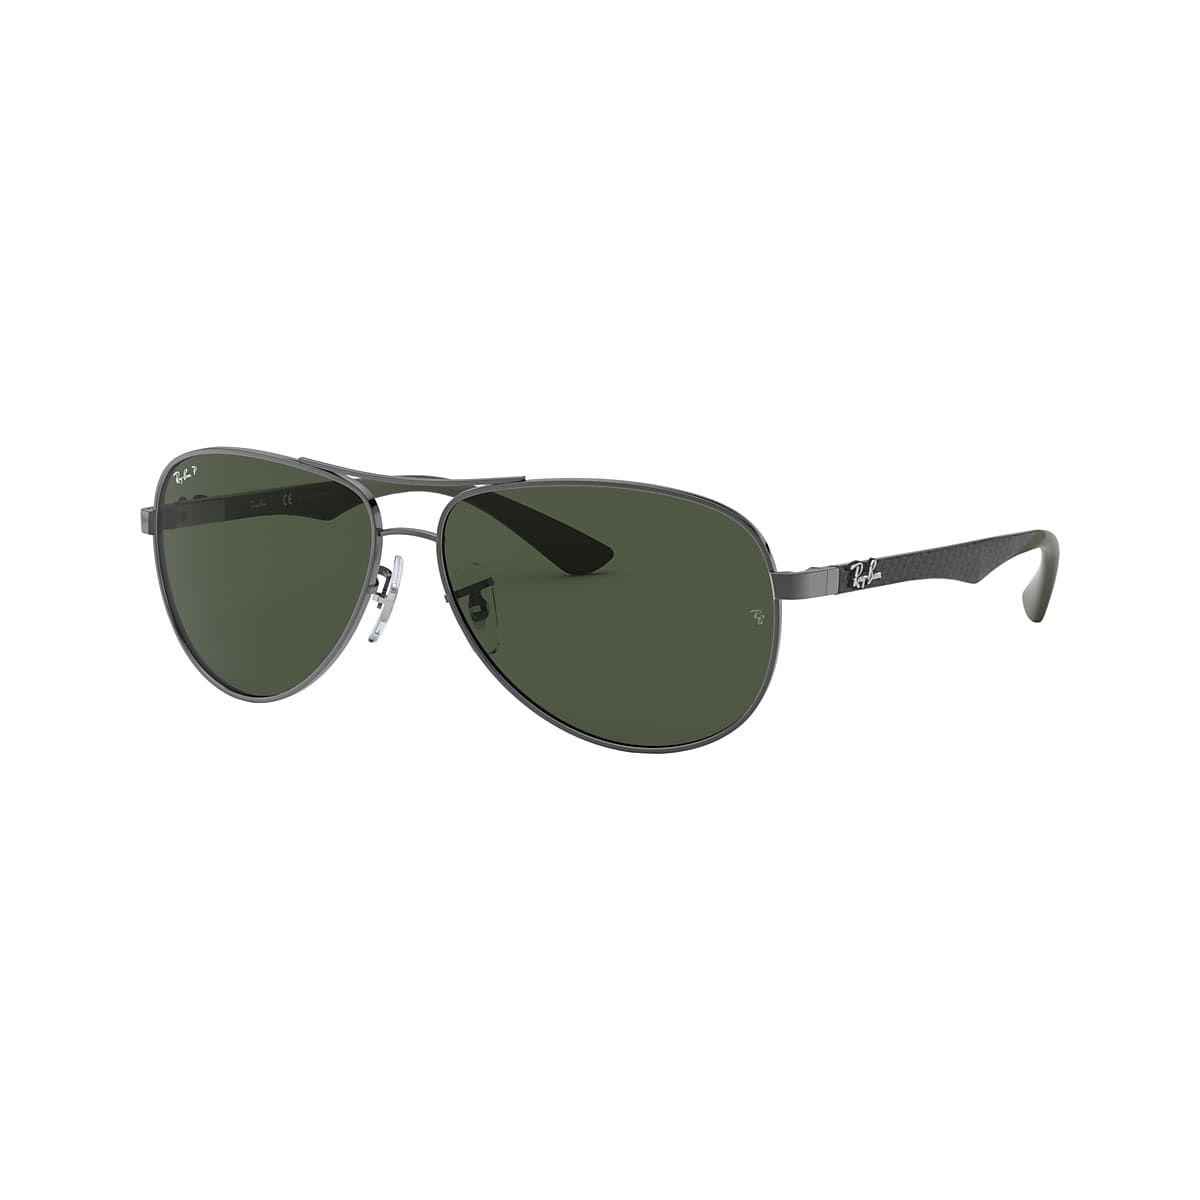 Ray-Ban 0RB8313 Sunglasses in Silver/gunmetal/grey | Target Optical